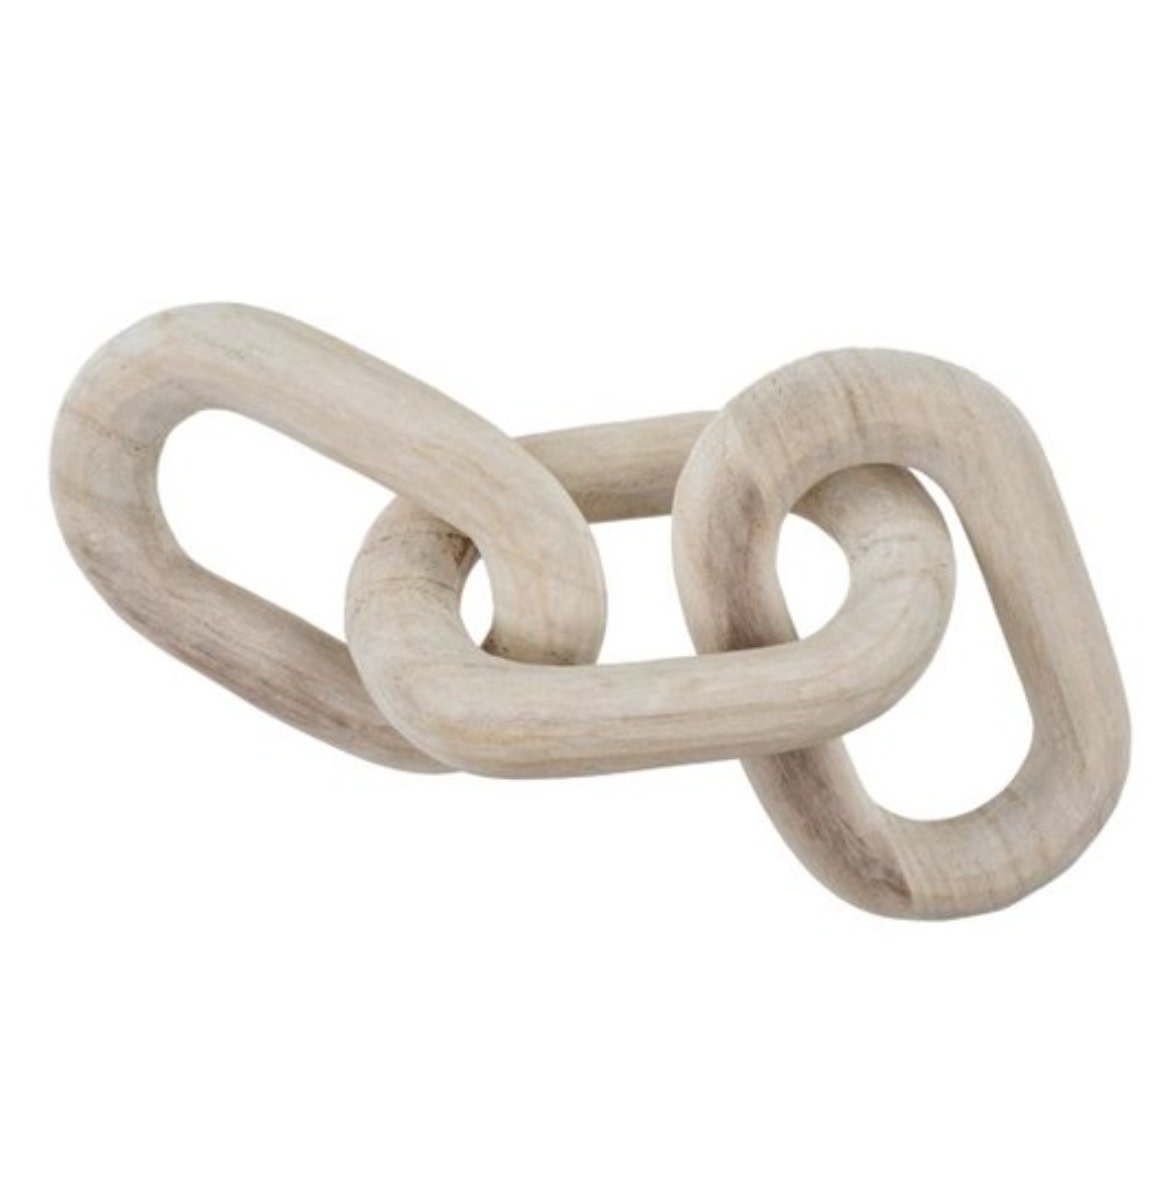 Wooden Chainlinks, White